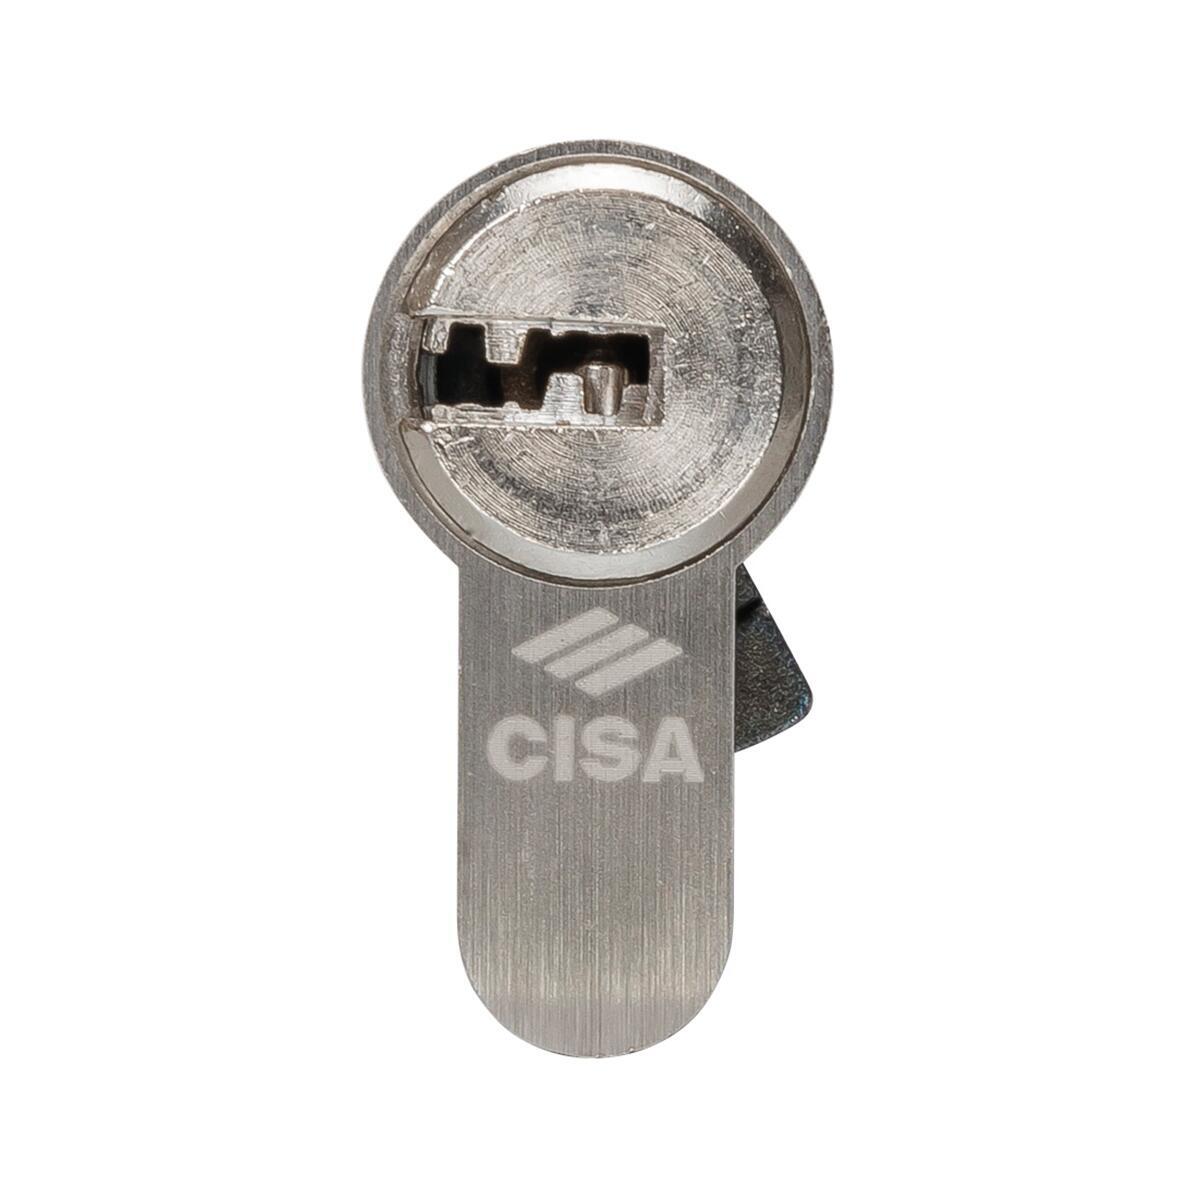 Cilindro Europeo CISA ASIX EASY 27 + 27 mm, 2 ingressi chiave in ottone nichelato - 4